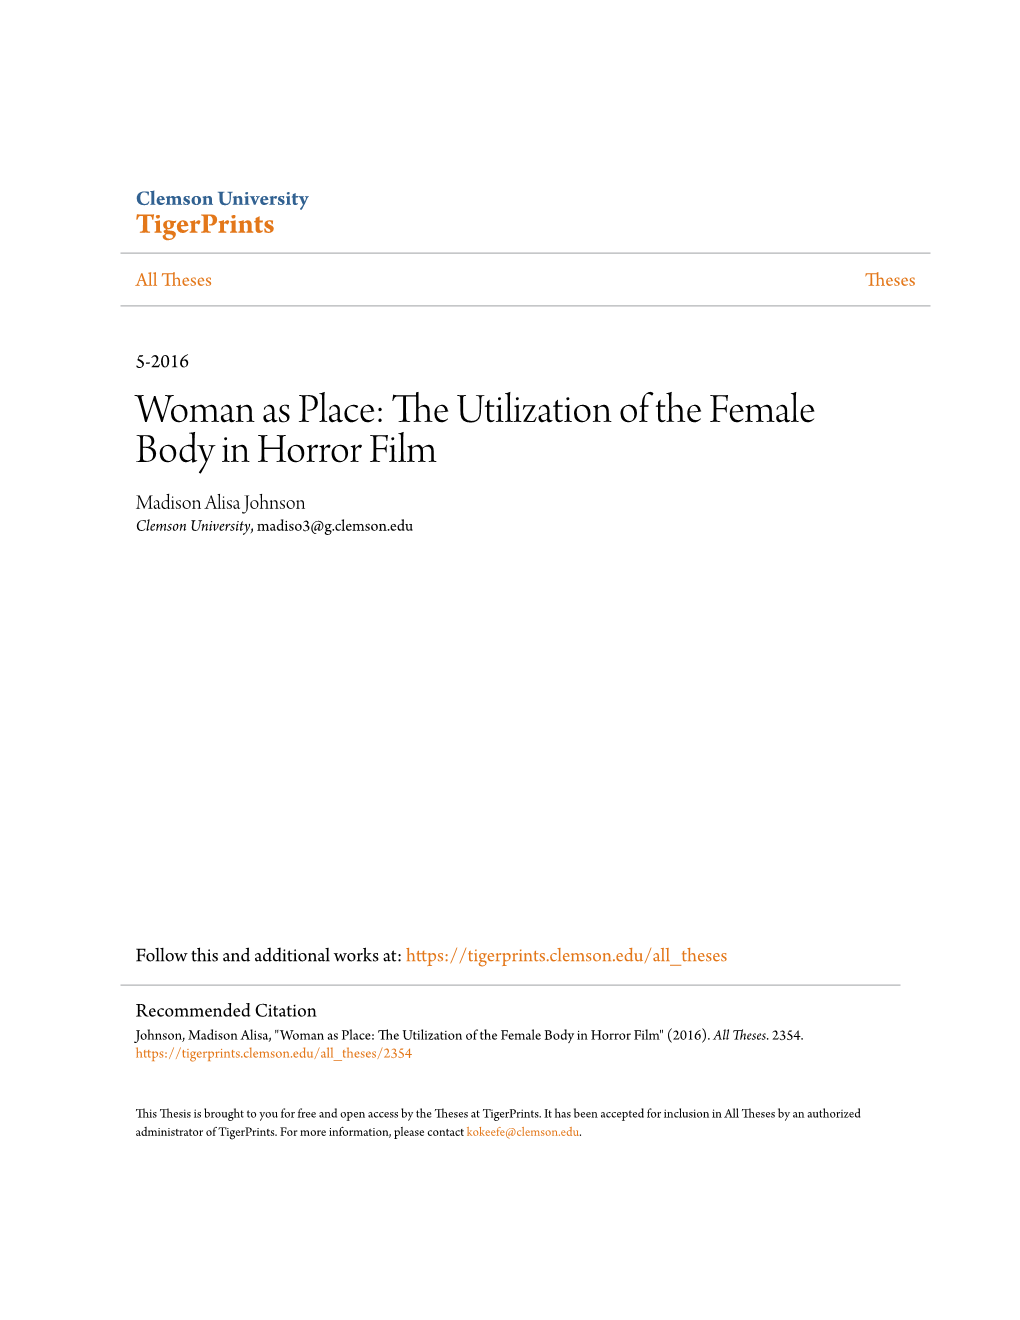 The Utilization of the Female Body in Horror Film ______